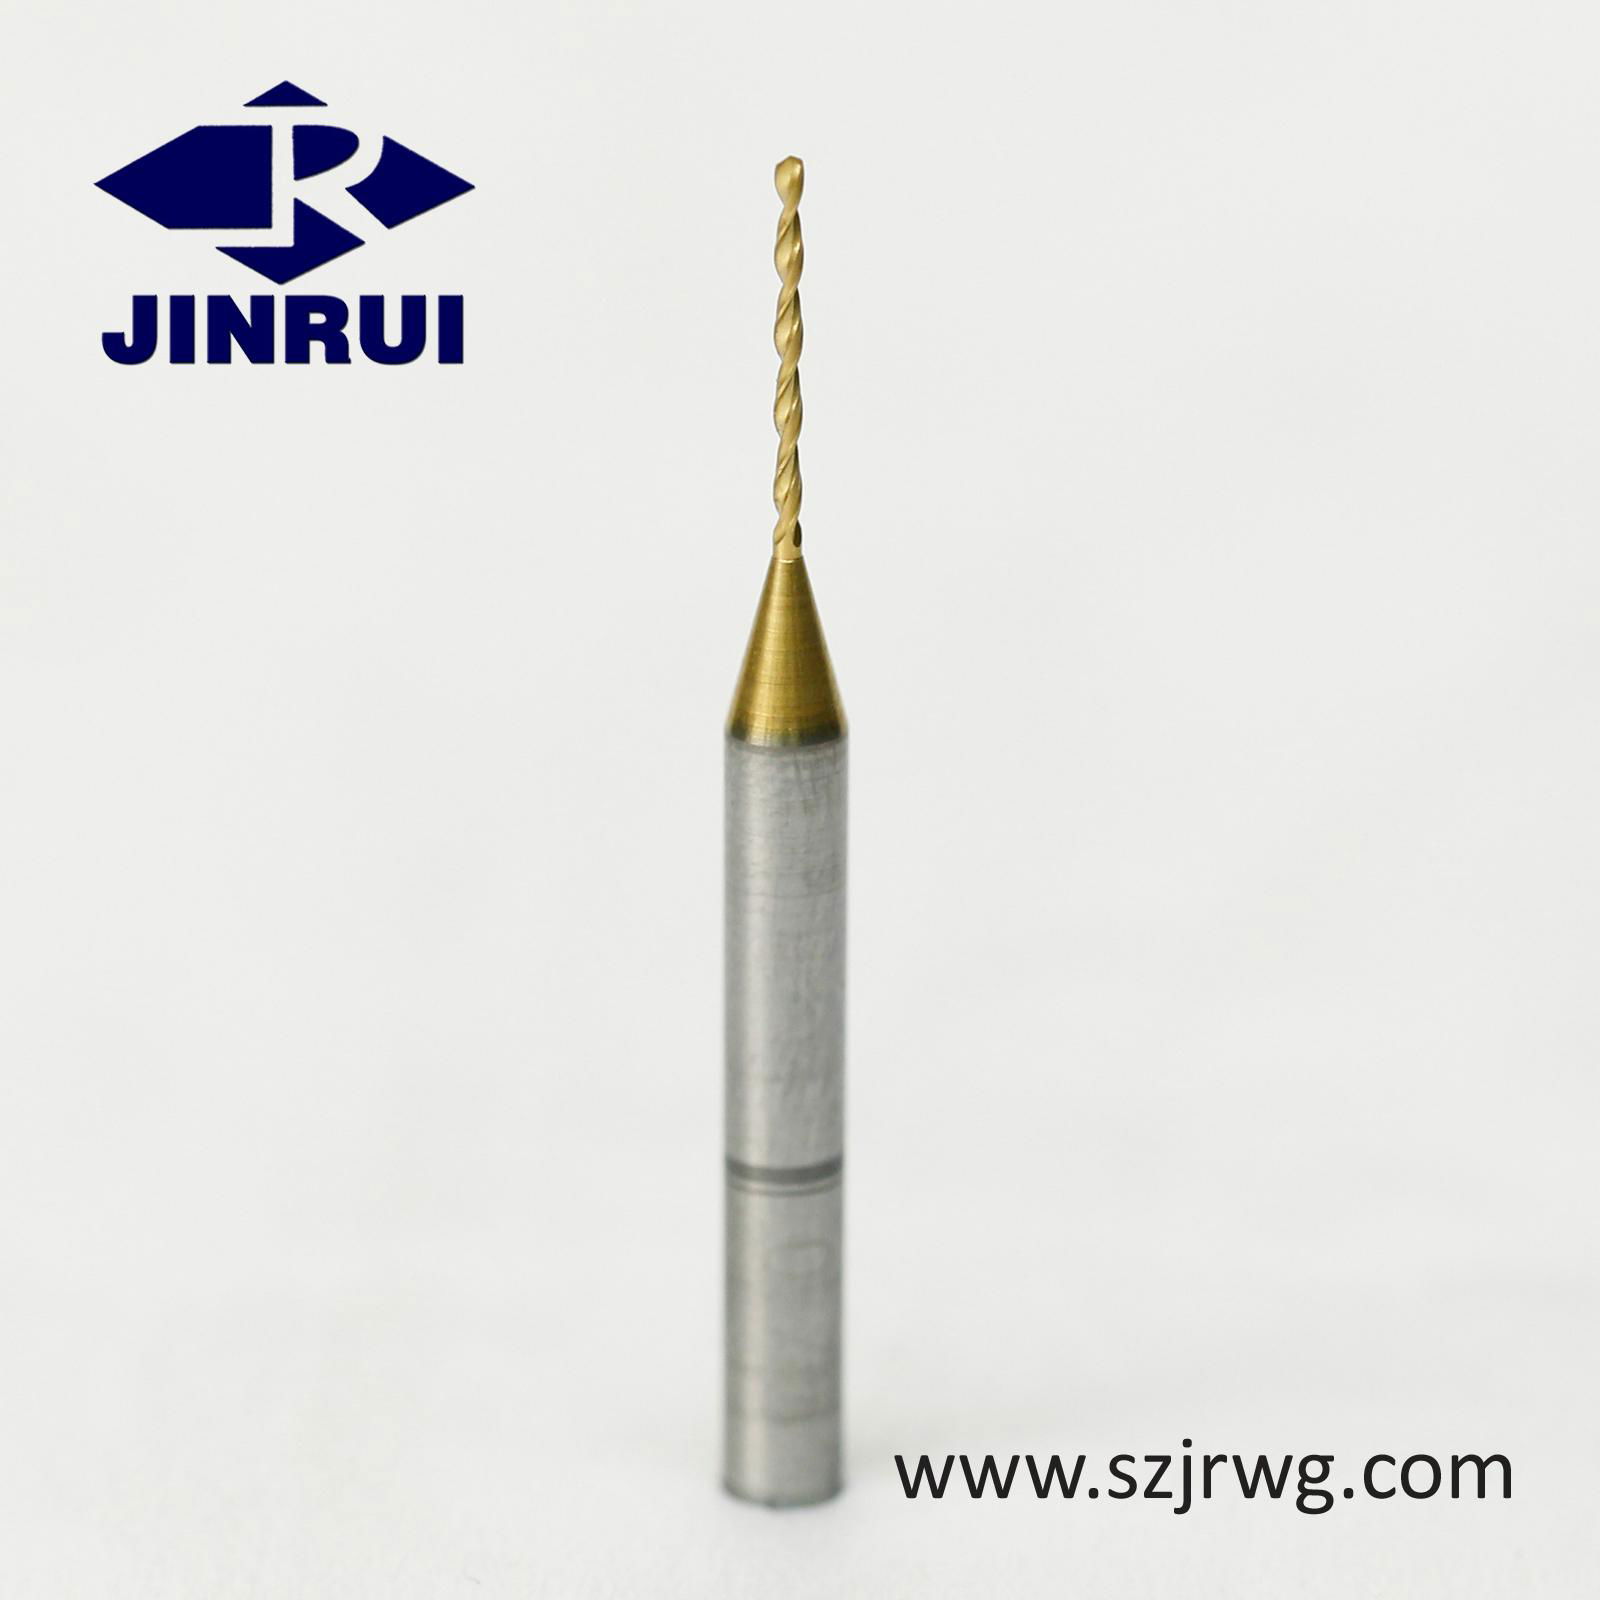 JR127 shenzhen tungsten carbide pcb mini drill bits with coating 5